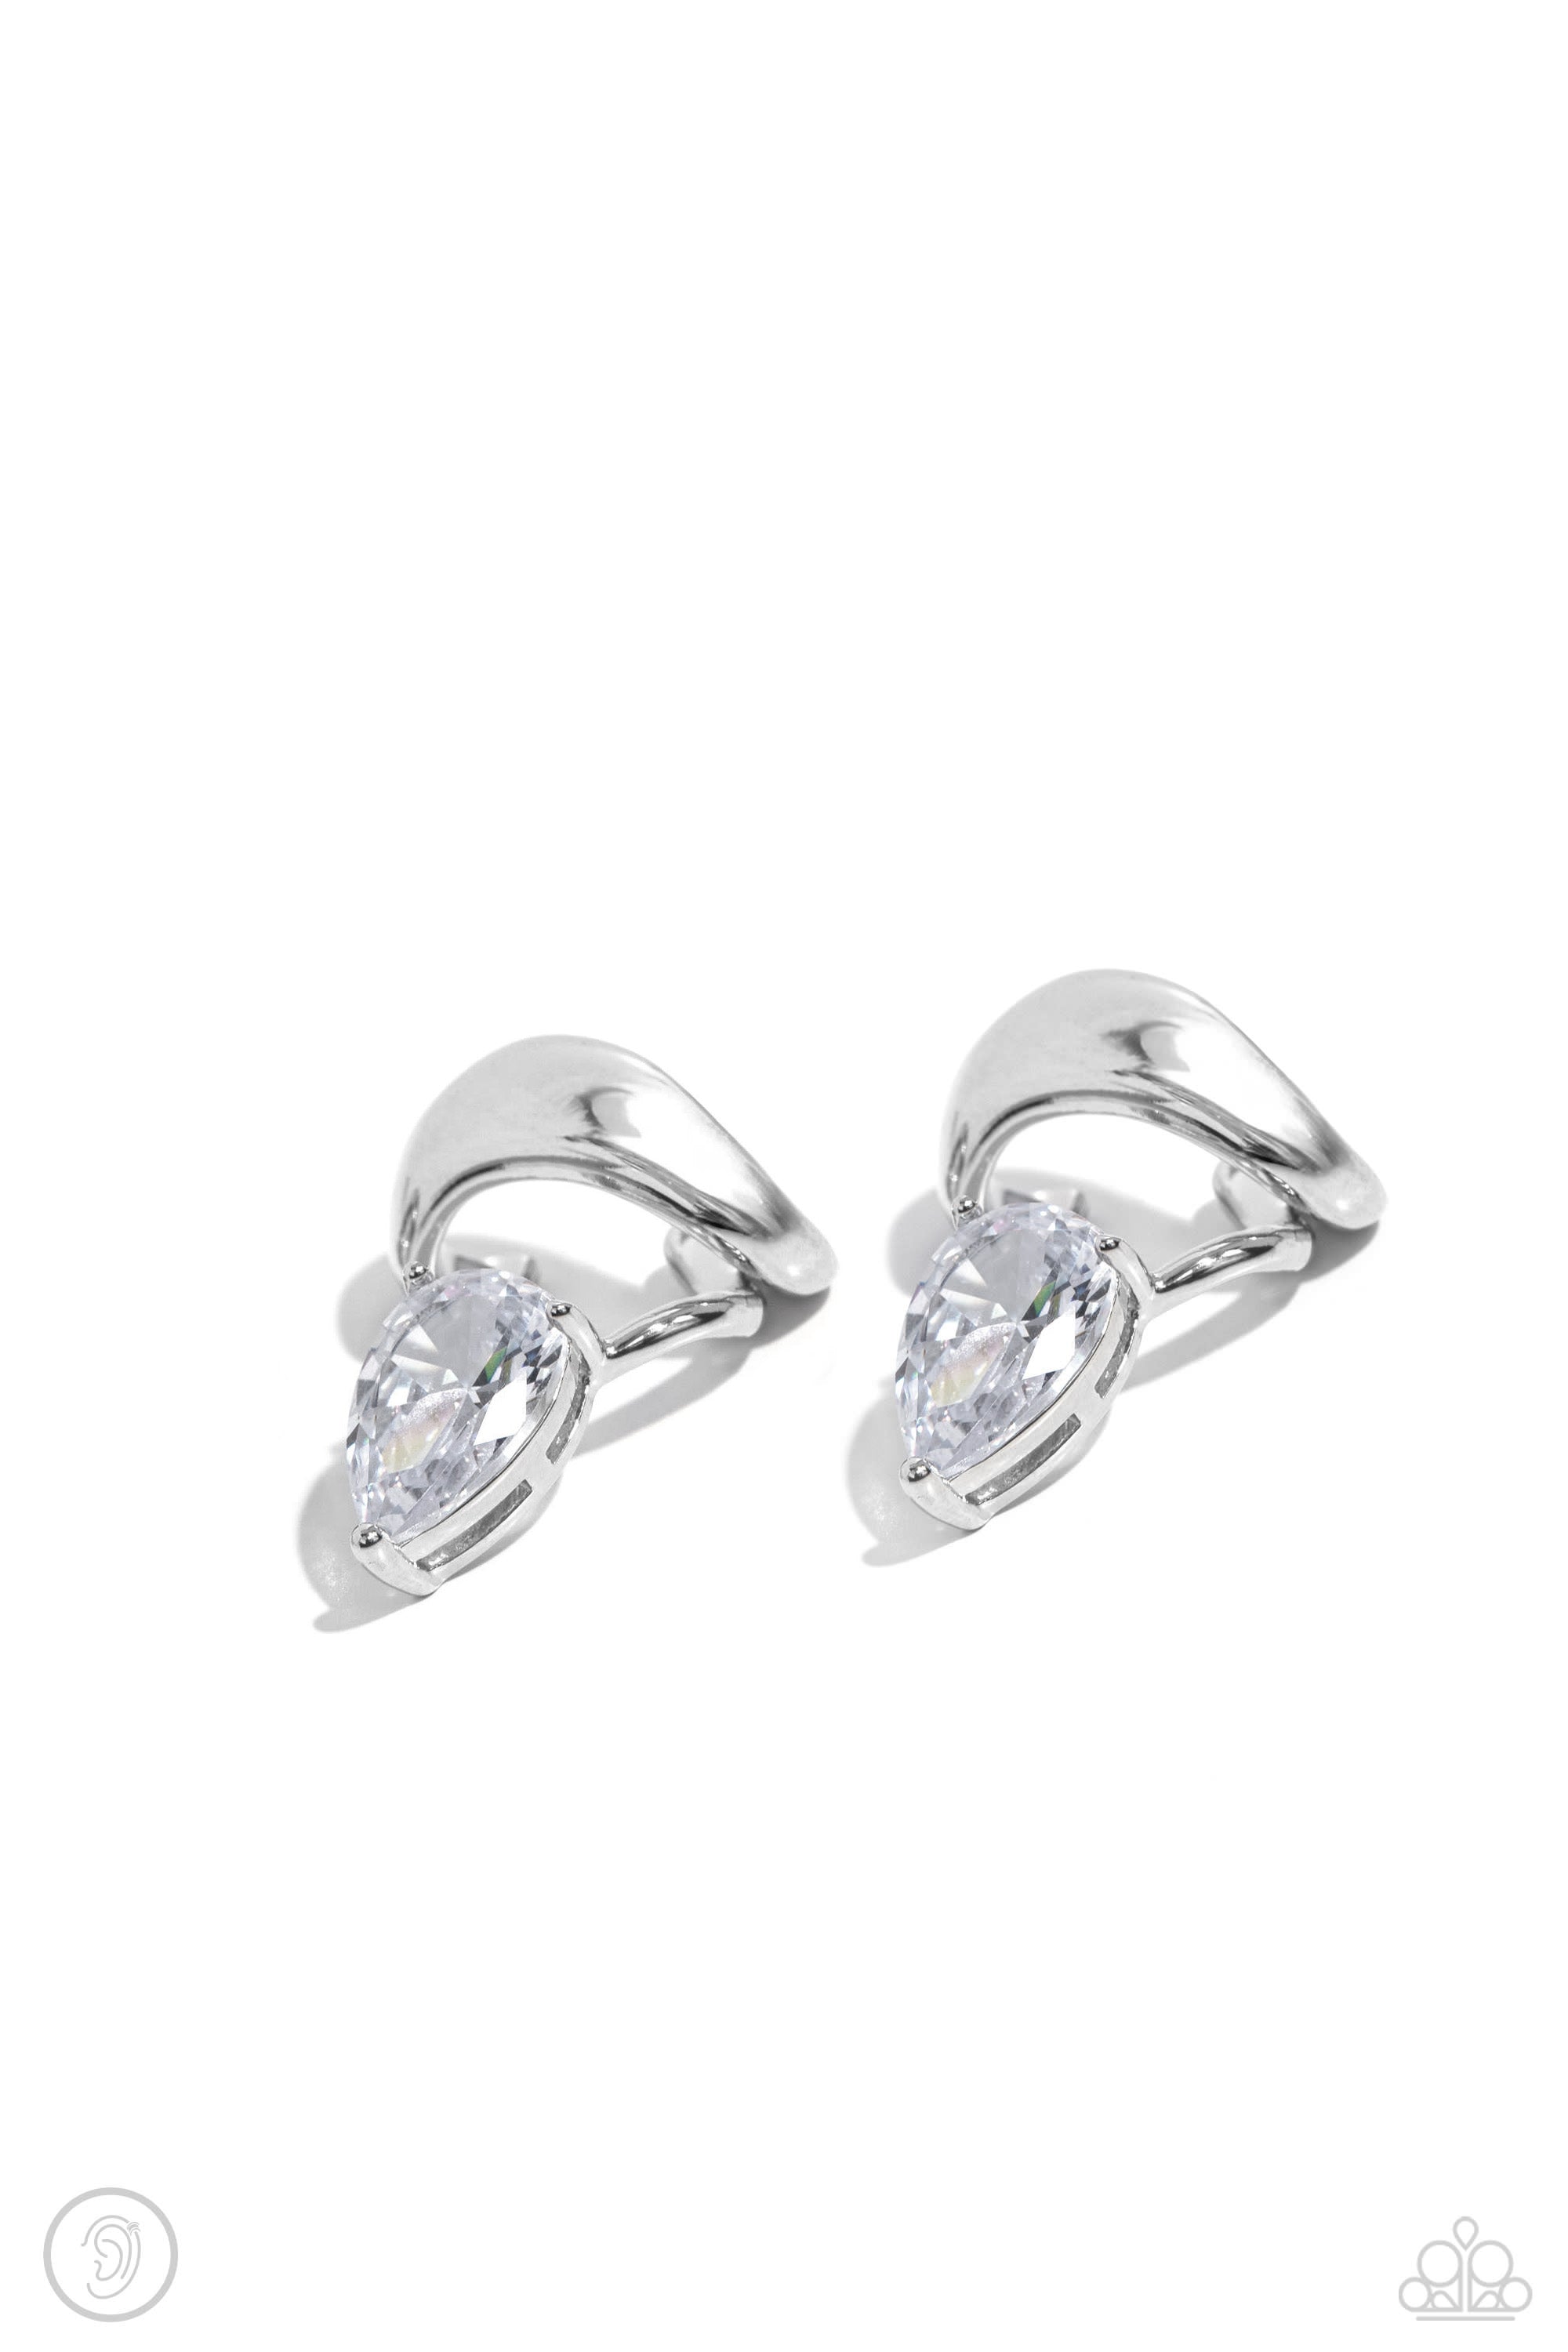 Twisting Teardrop White Rhinestone Cuff Earrings - Paparazzi Accessories- lightbox - CarasShop.com - $5 Jewelry by Cara Jewels